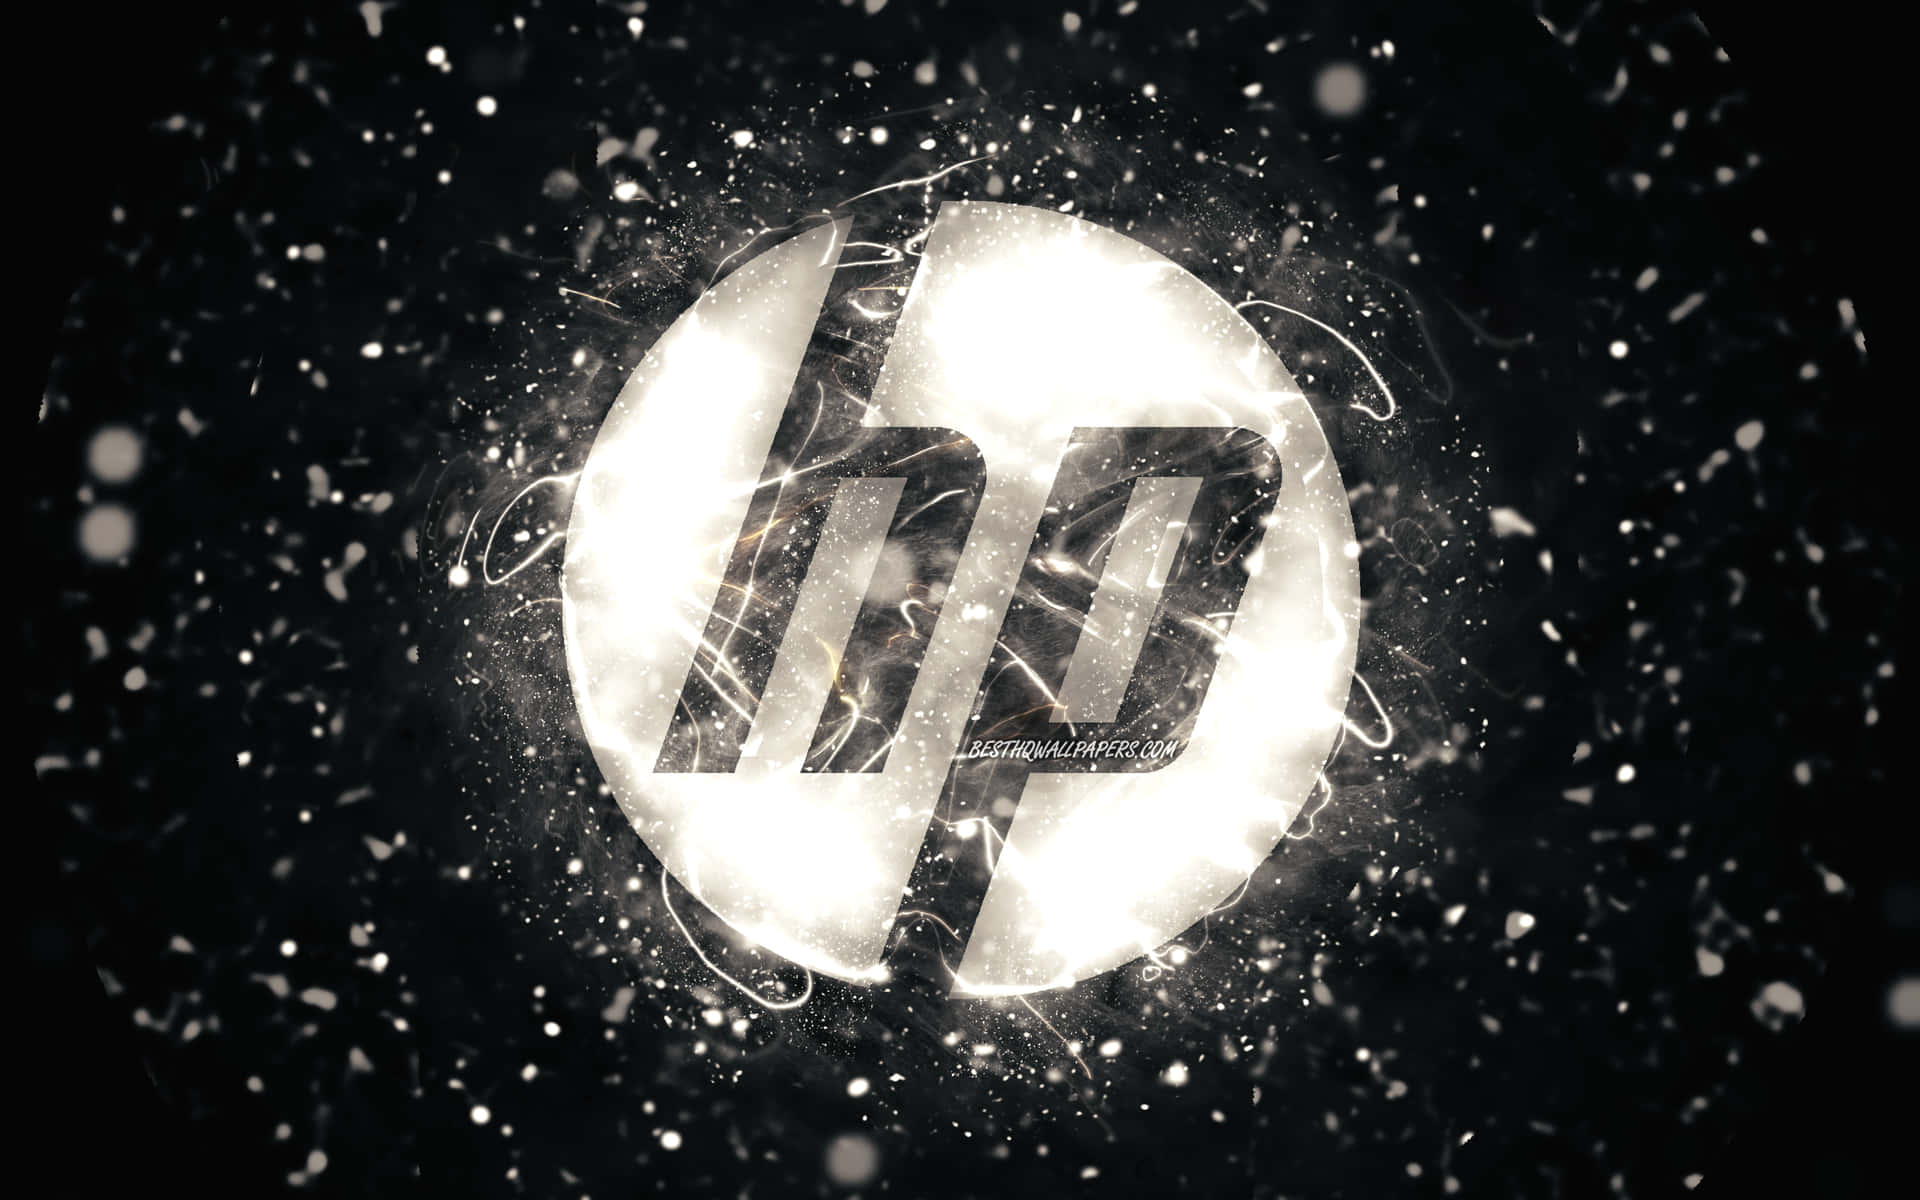 Hp Logo In The Snow Wallpaper